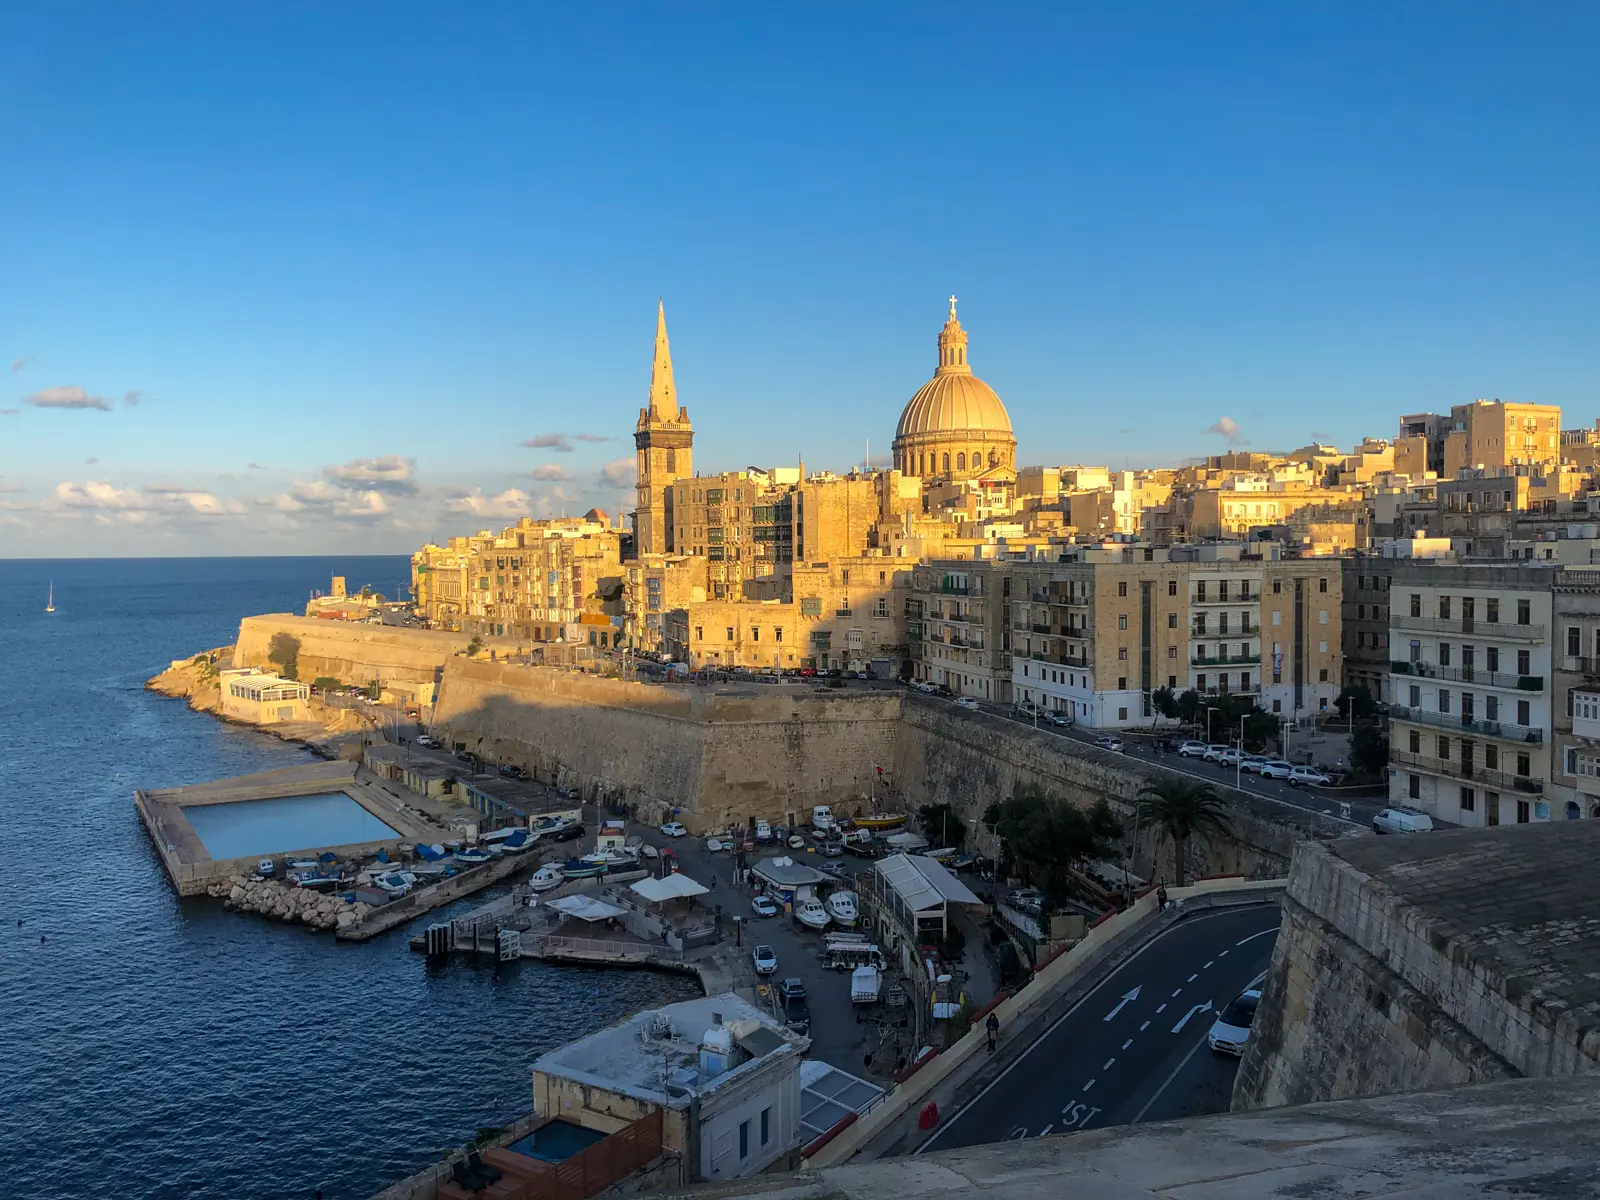 Photos from Malta